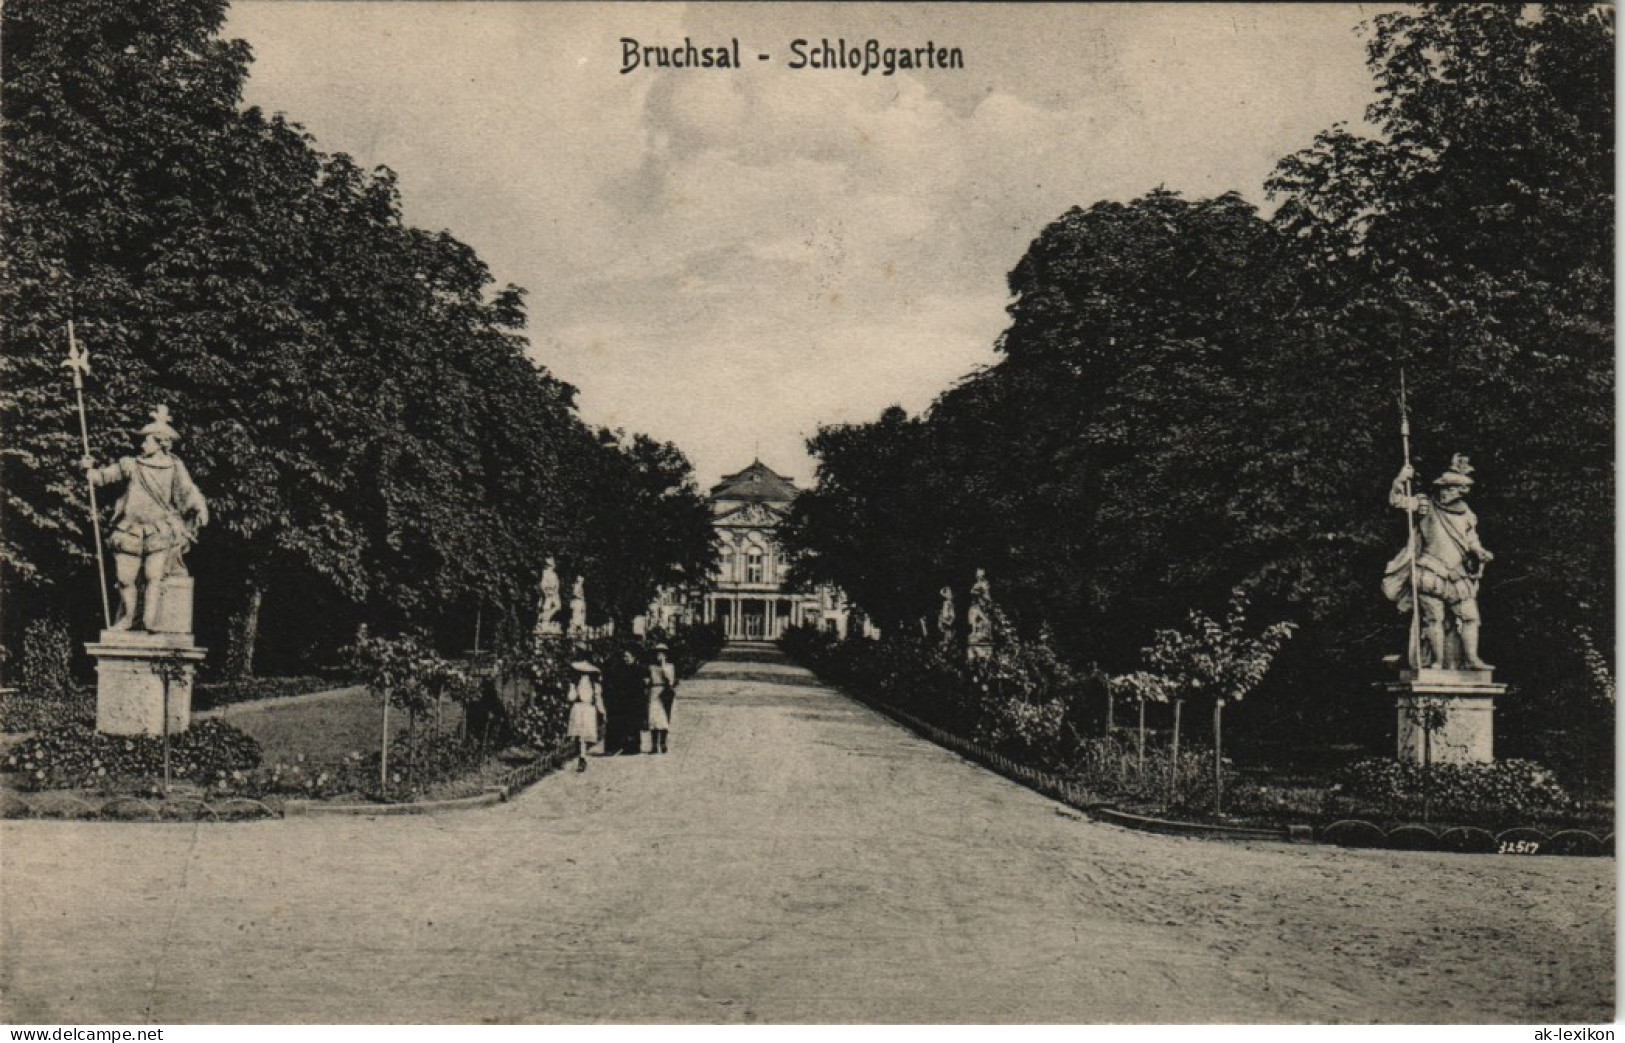 Ansichtskarte Bruchsal Schloß, Schloßgarten Statuen 1909 - Bruchsal